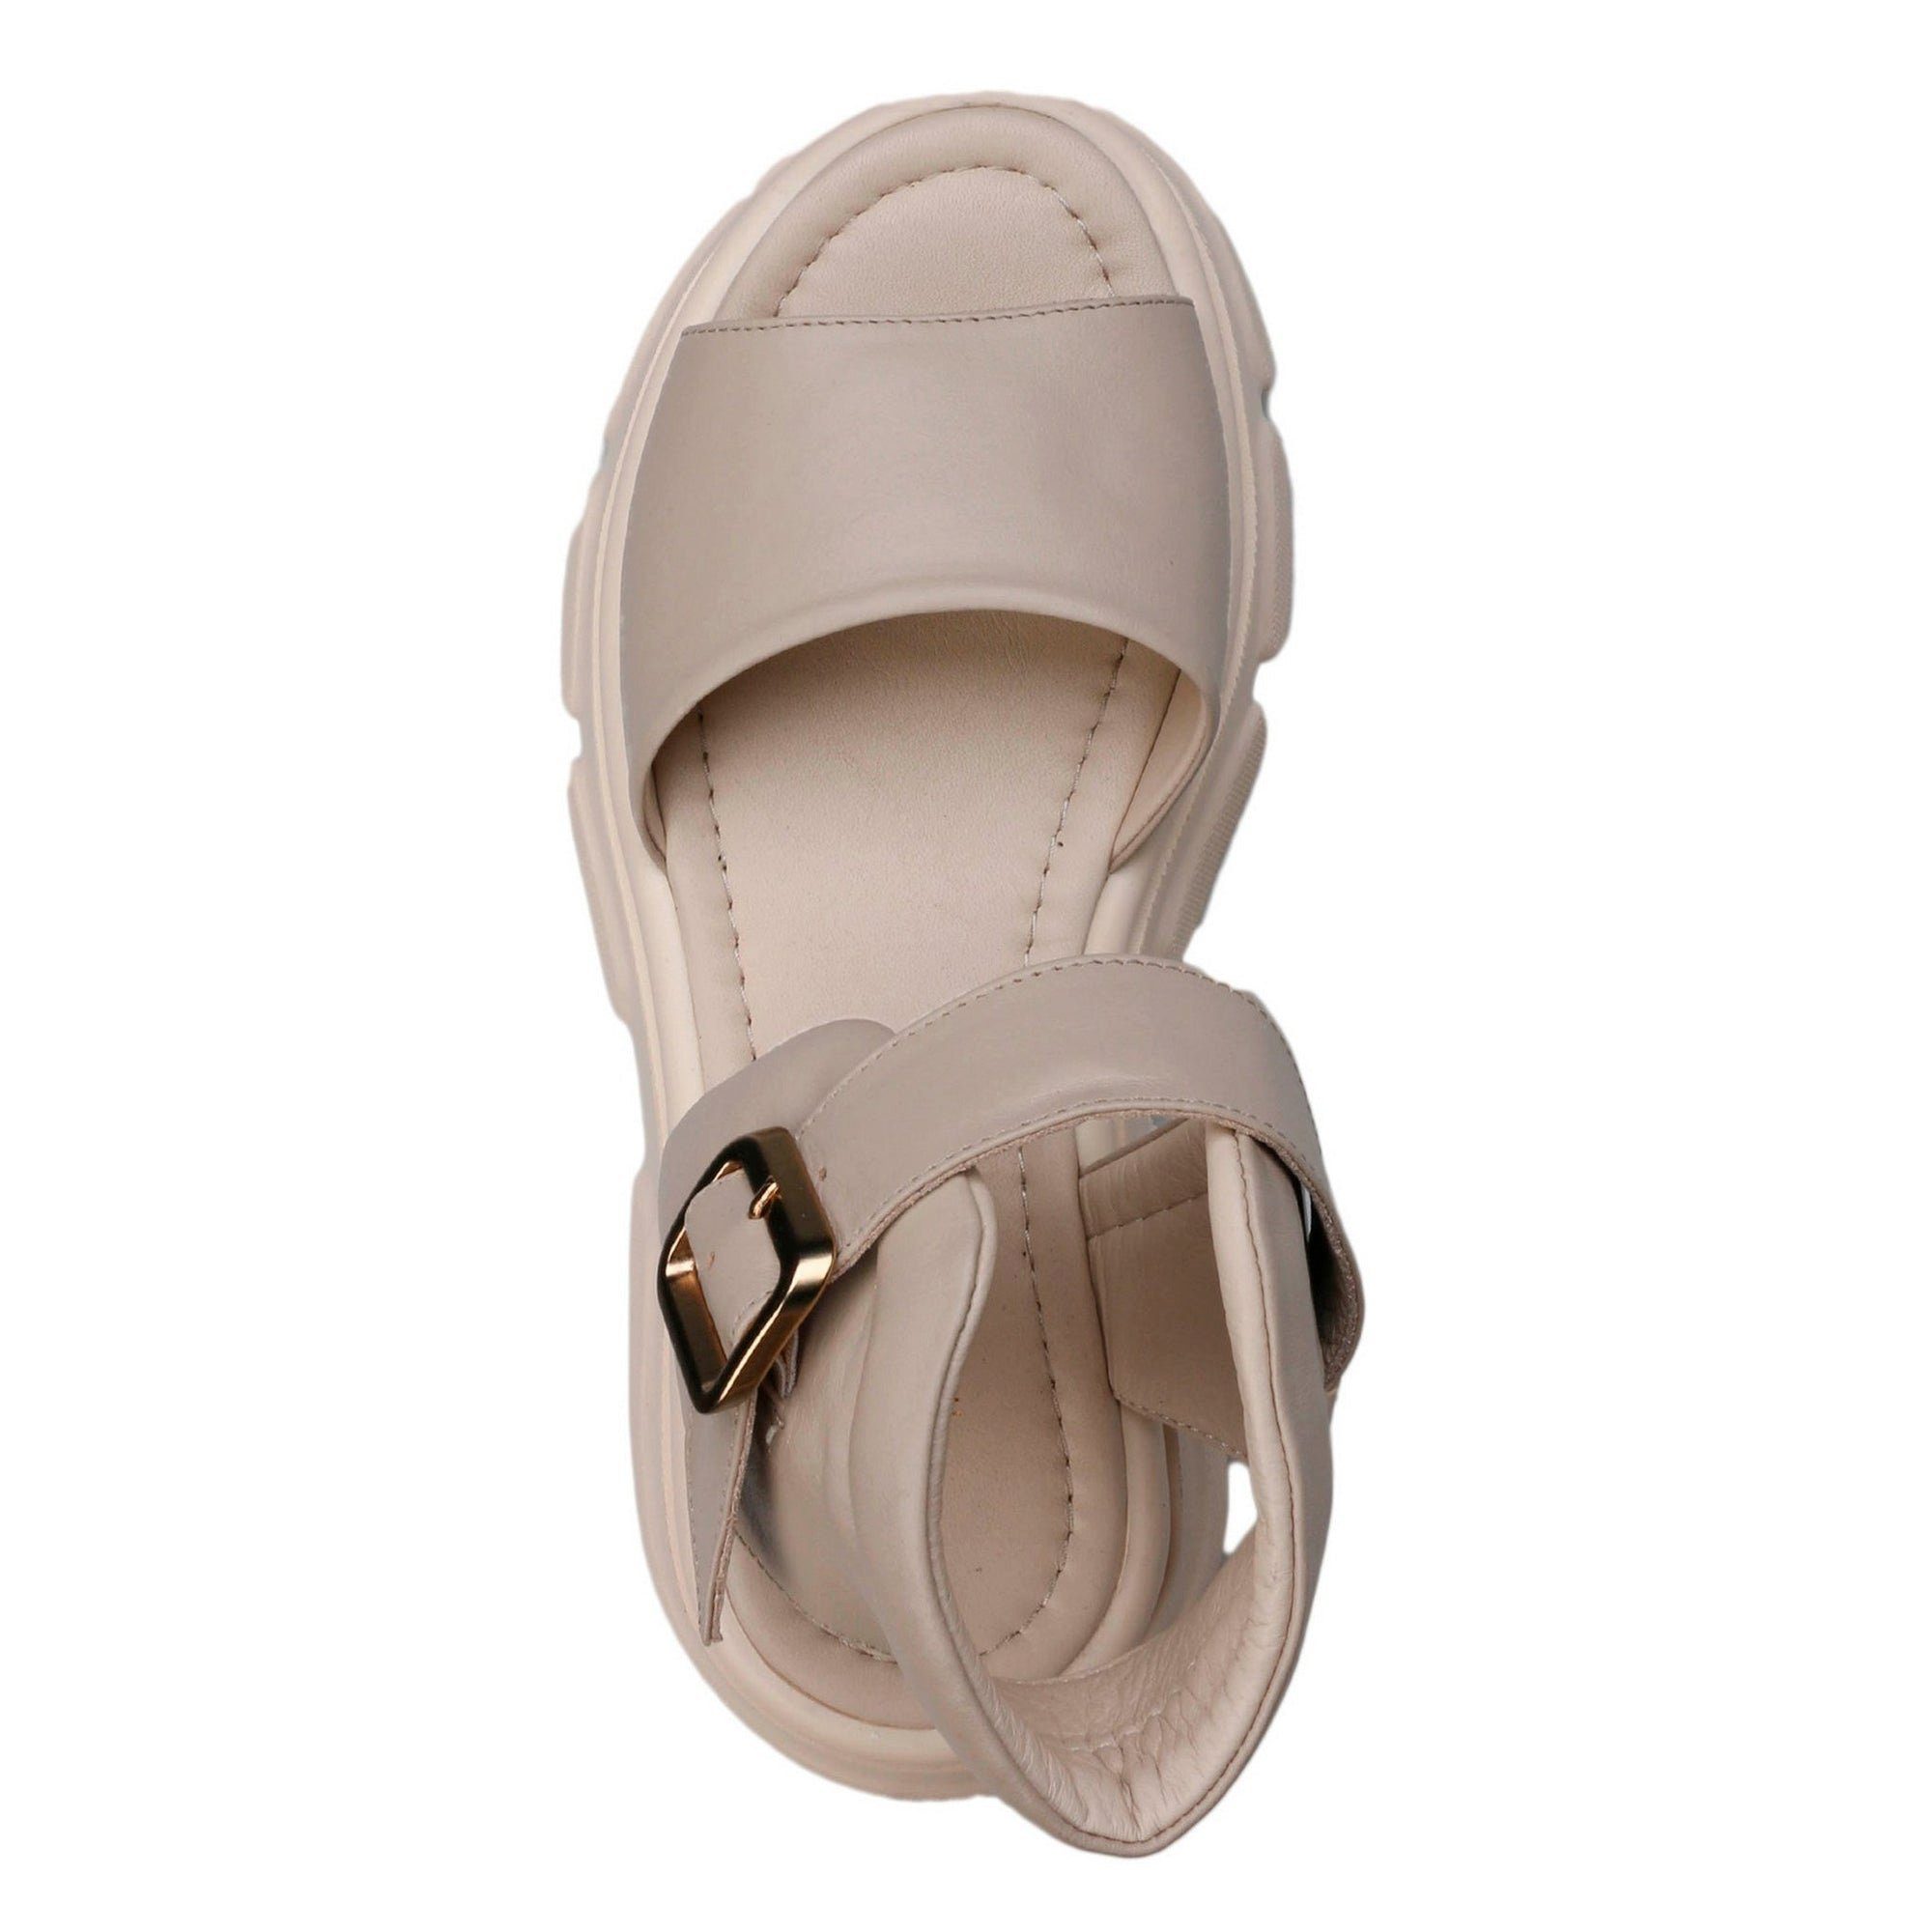 La Ballerina Schuhe Plateau Damen Trend Sandalen beige Profilsohle mit Schnalle Sandaletten mit Leder Sandale Bequeme Echtleder Riemchen